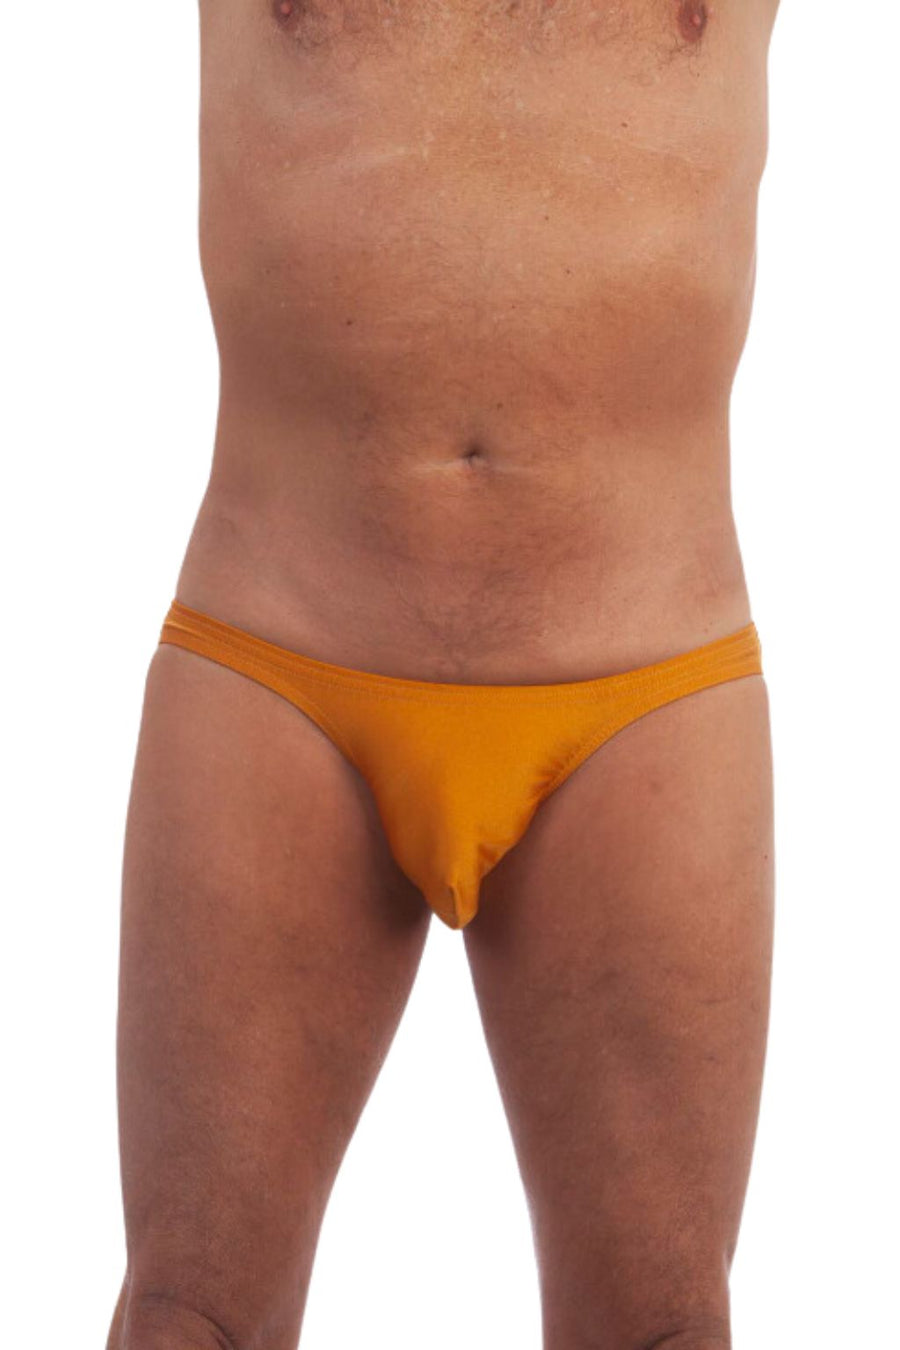 N2N Bodywear Mens Shiny Little Beach Bikini – Bodywear for Men